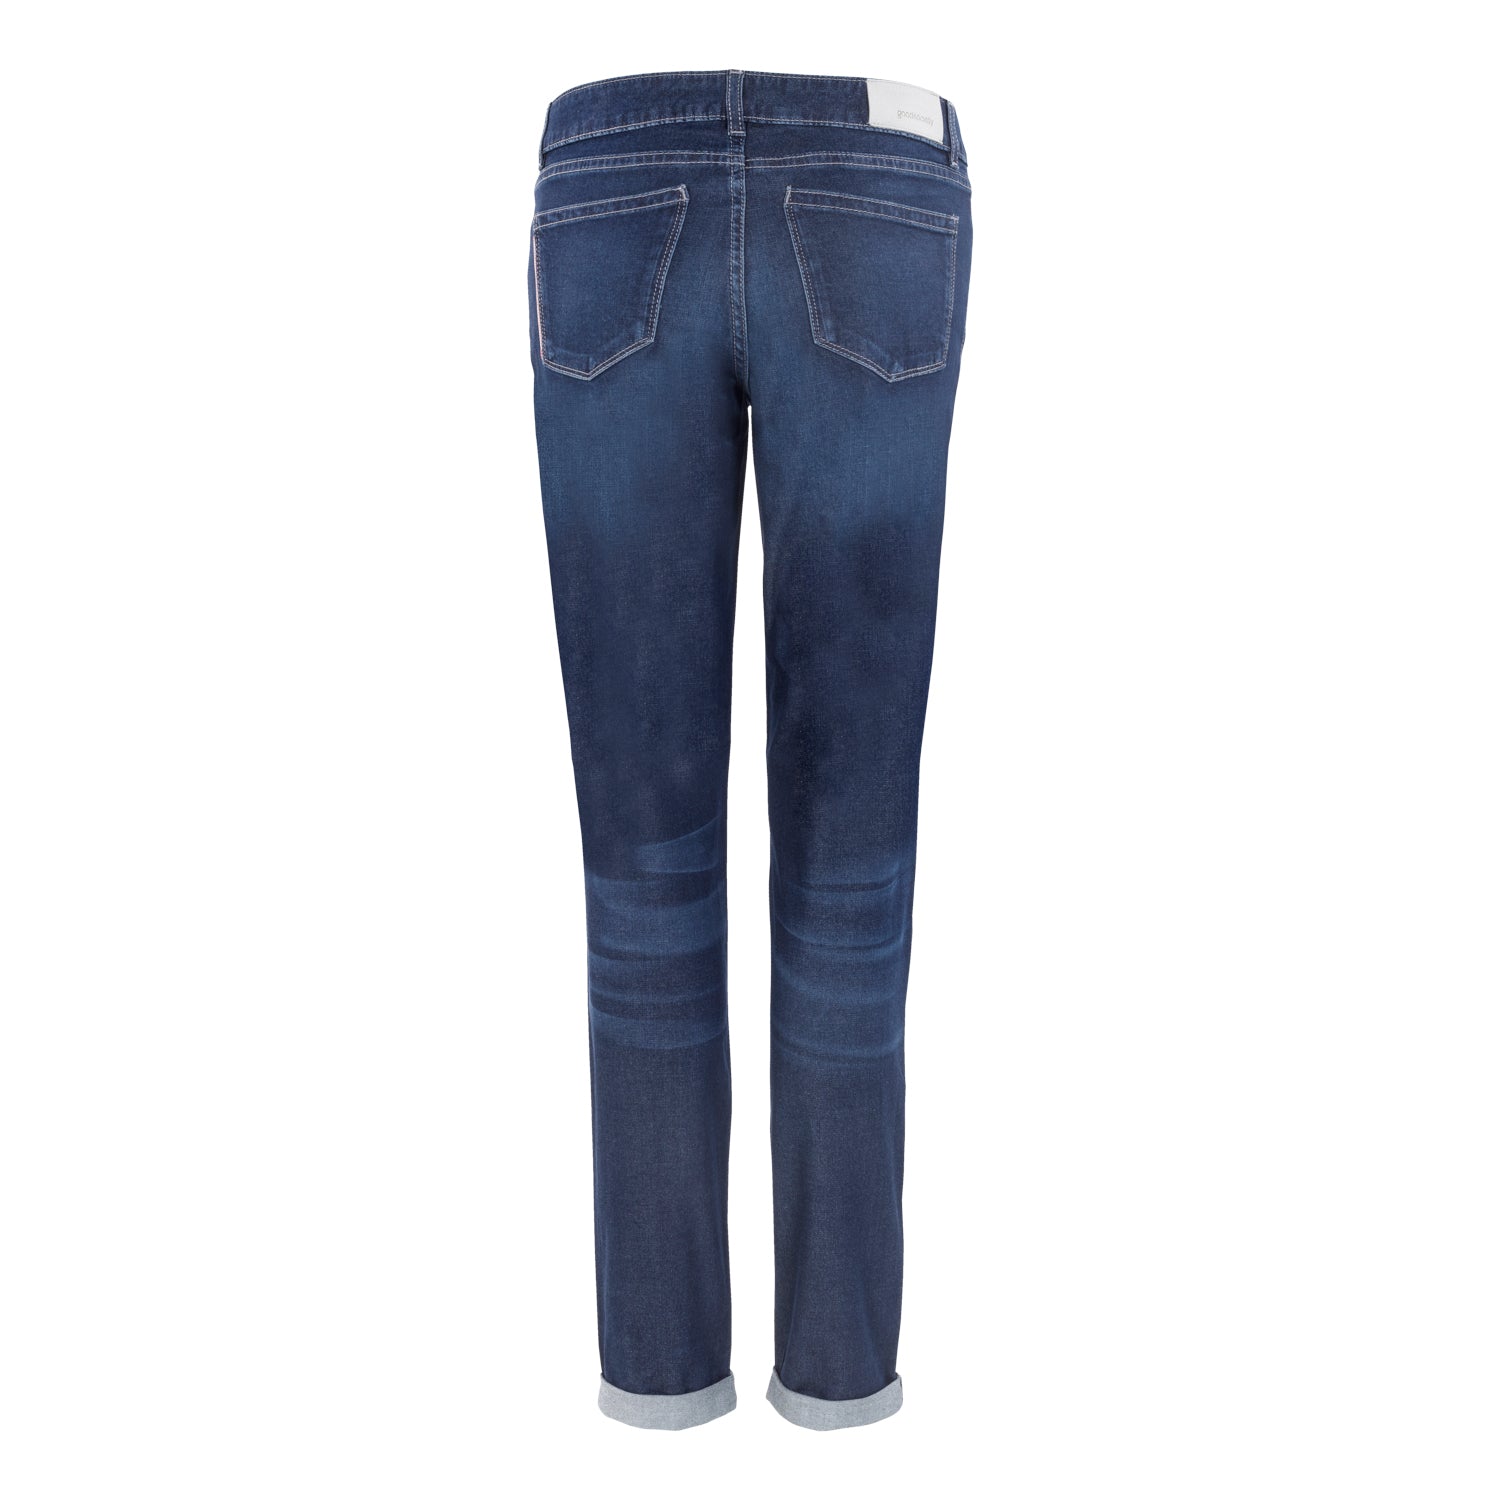 Women's organic denim jeans by goodsociety